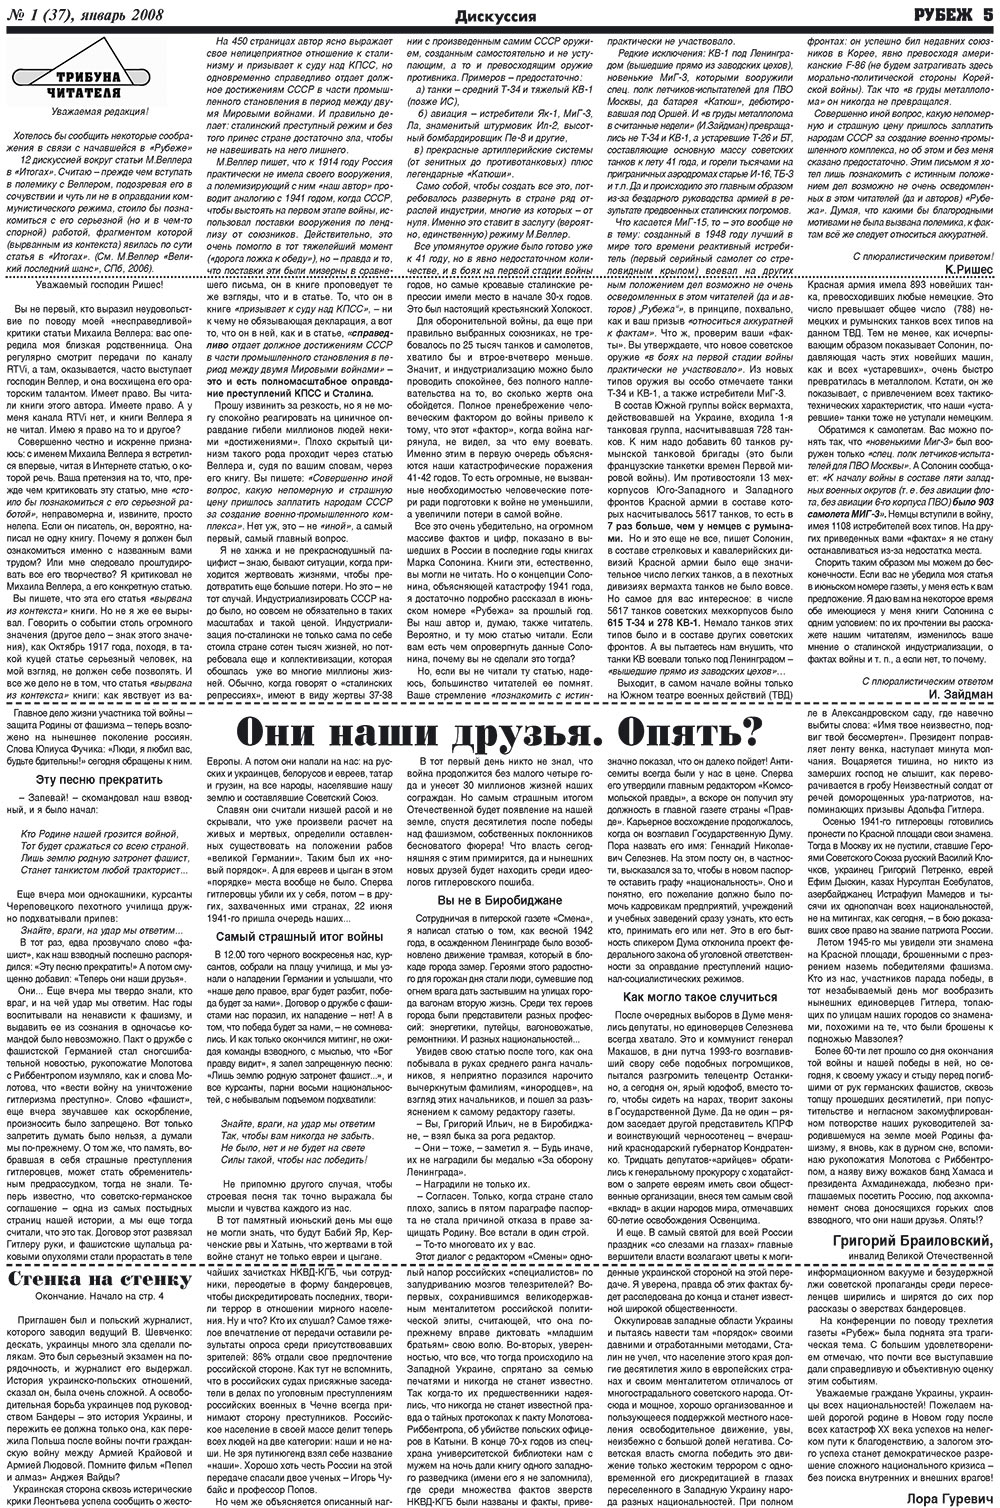 Рубеж, газета. 2008 №1 стр.5